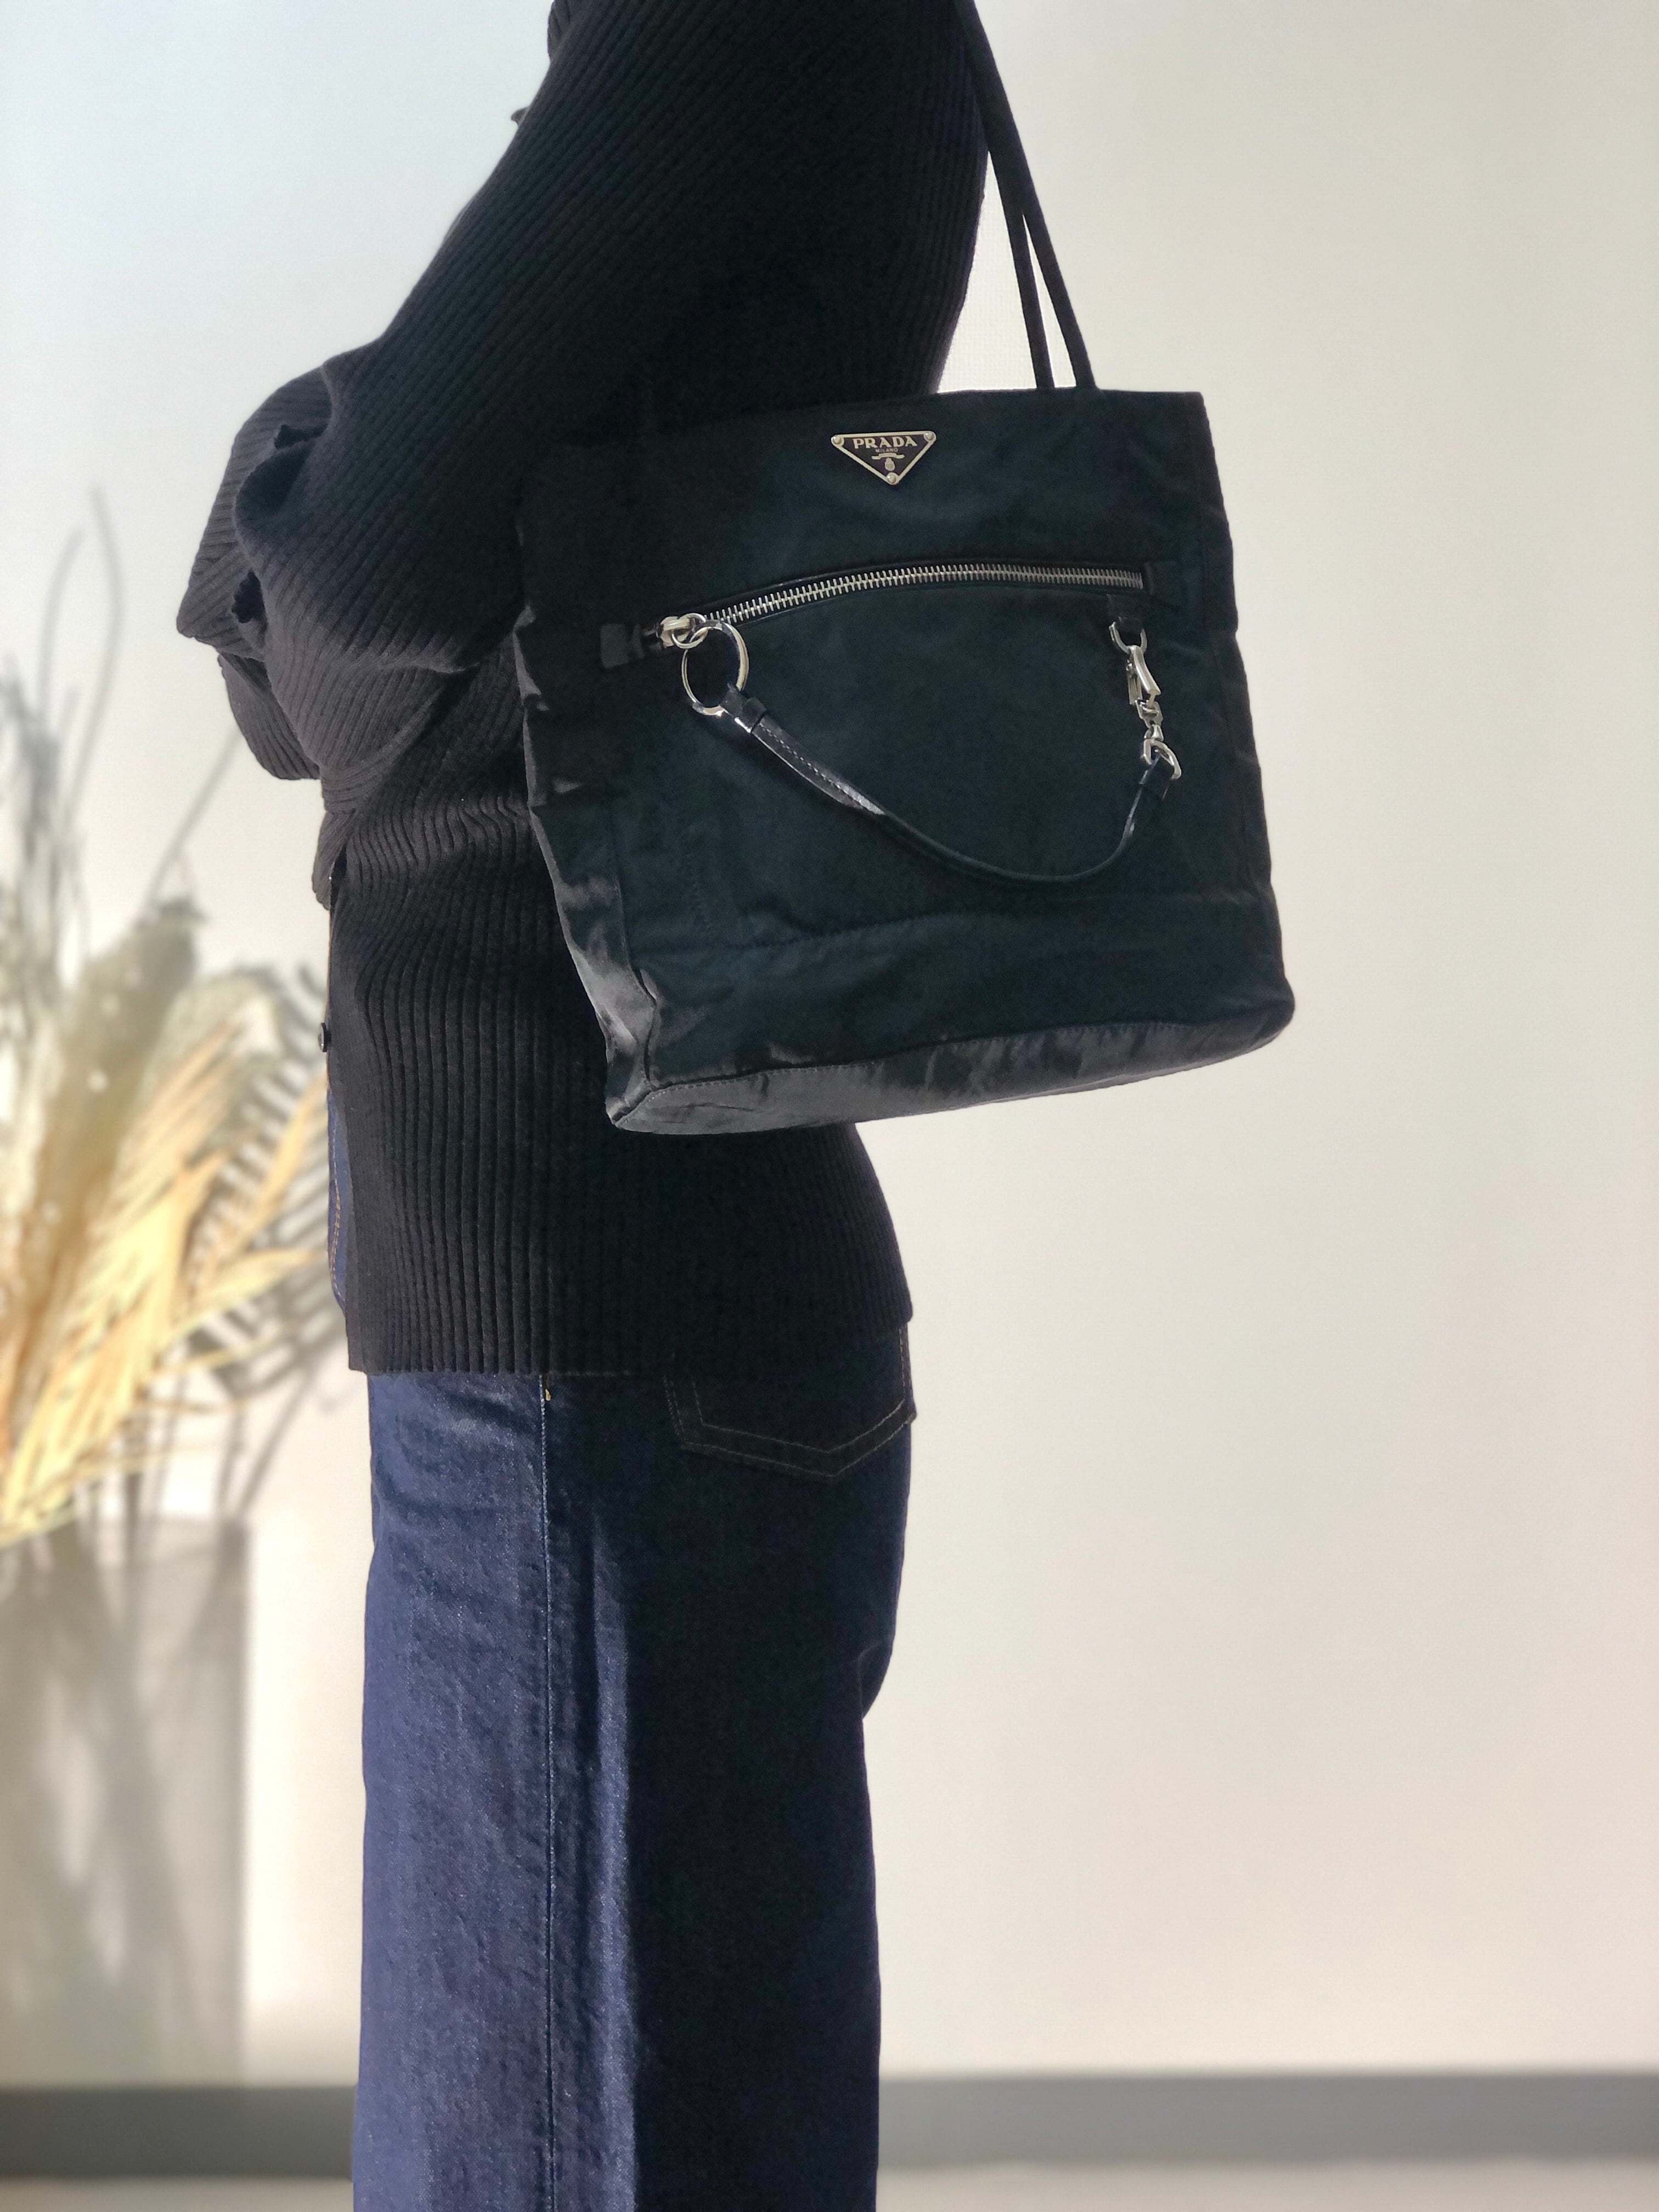 Prada Vintage - Logo Nylon Tote Bag - Black - Leather Handbag